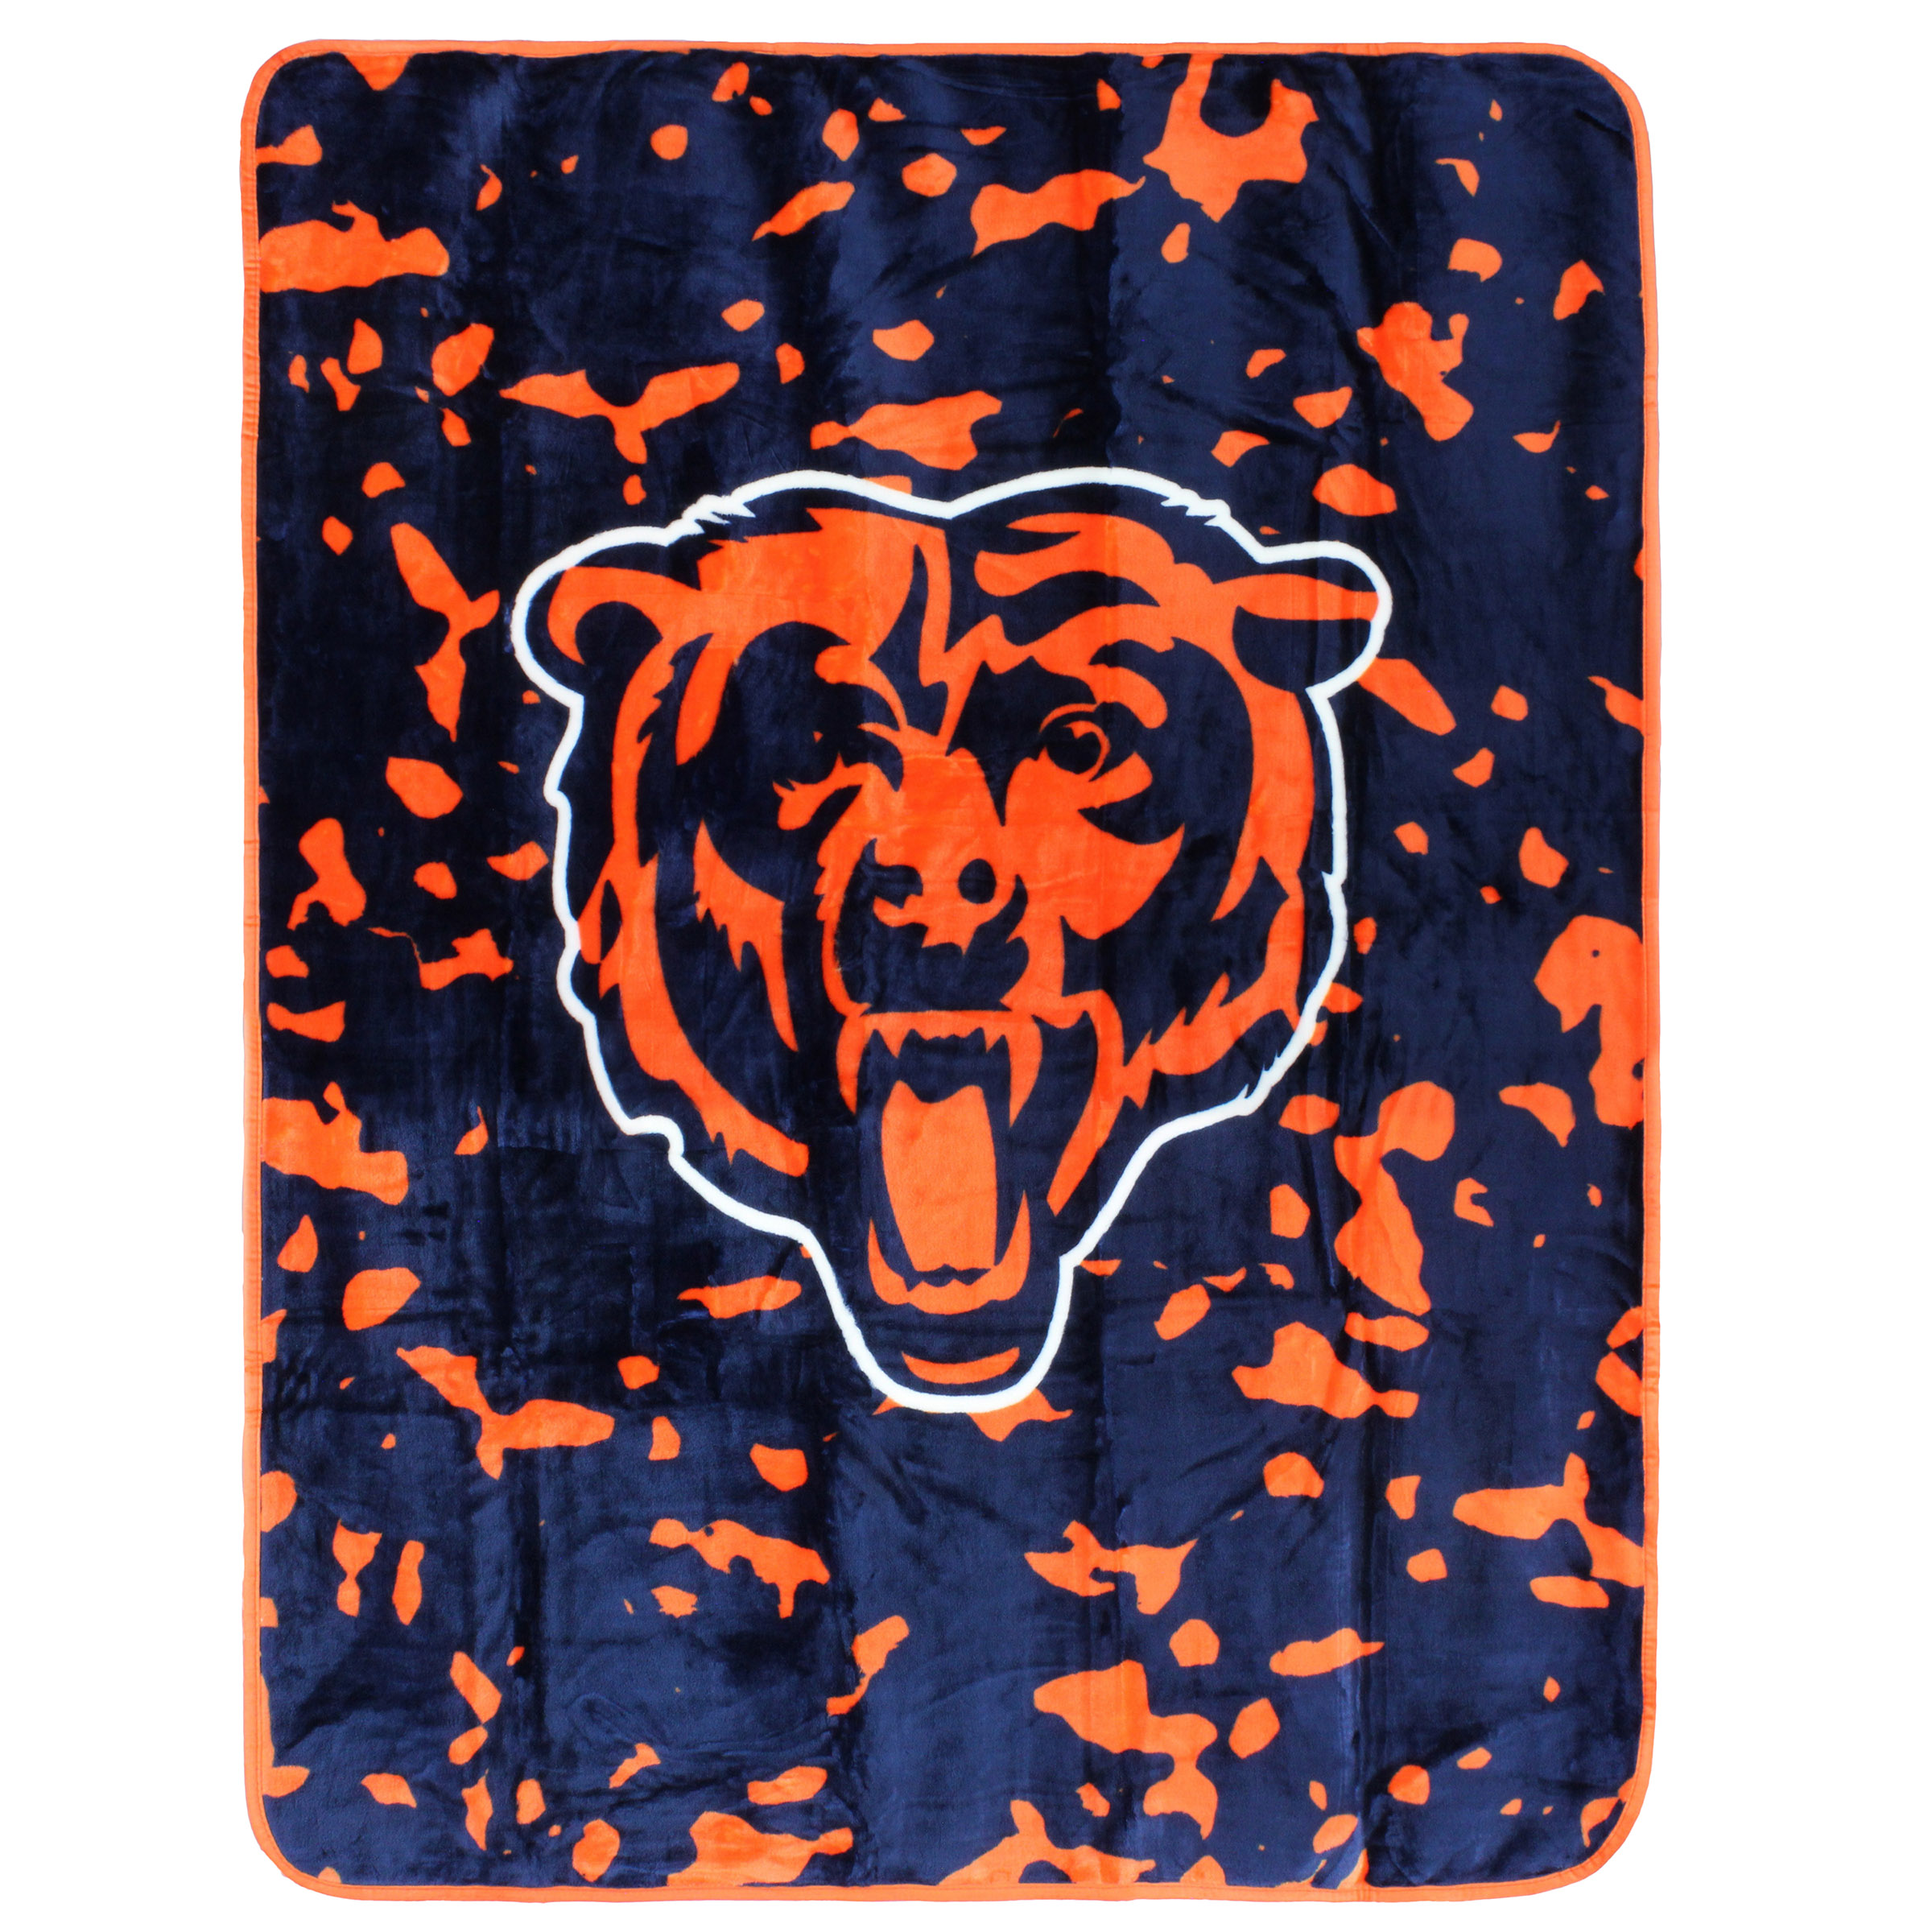 Chicago Bears 50 x 60 Teen Adult Unisex Comfy Throw Blanket - image 1 of 5